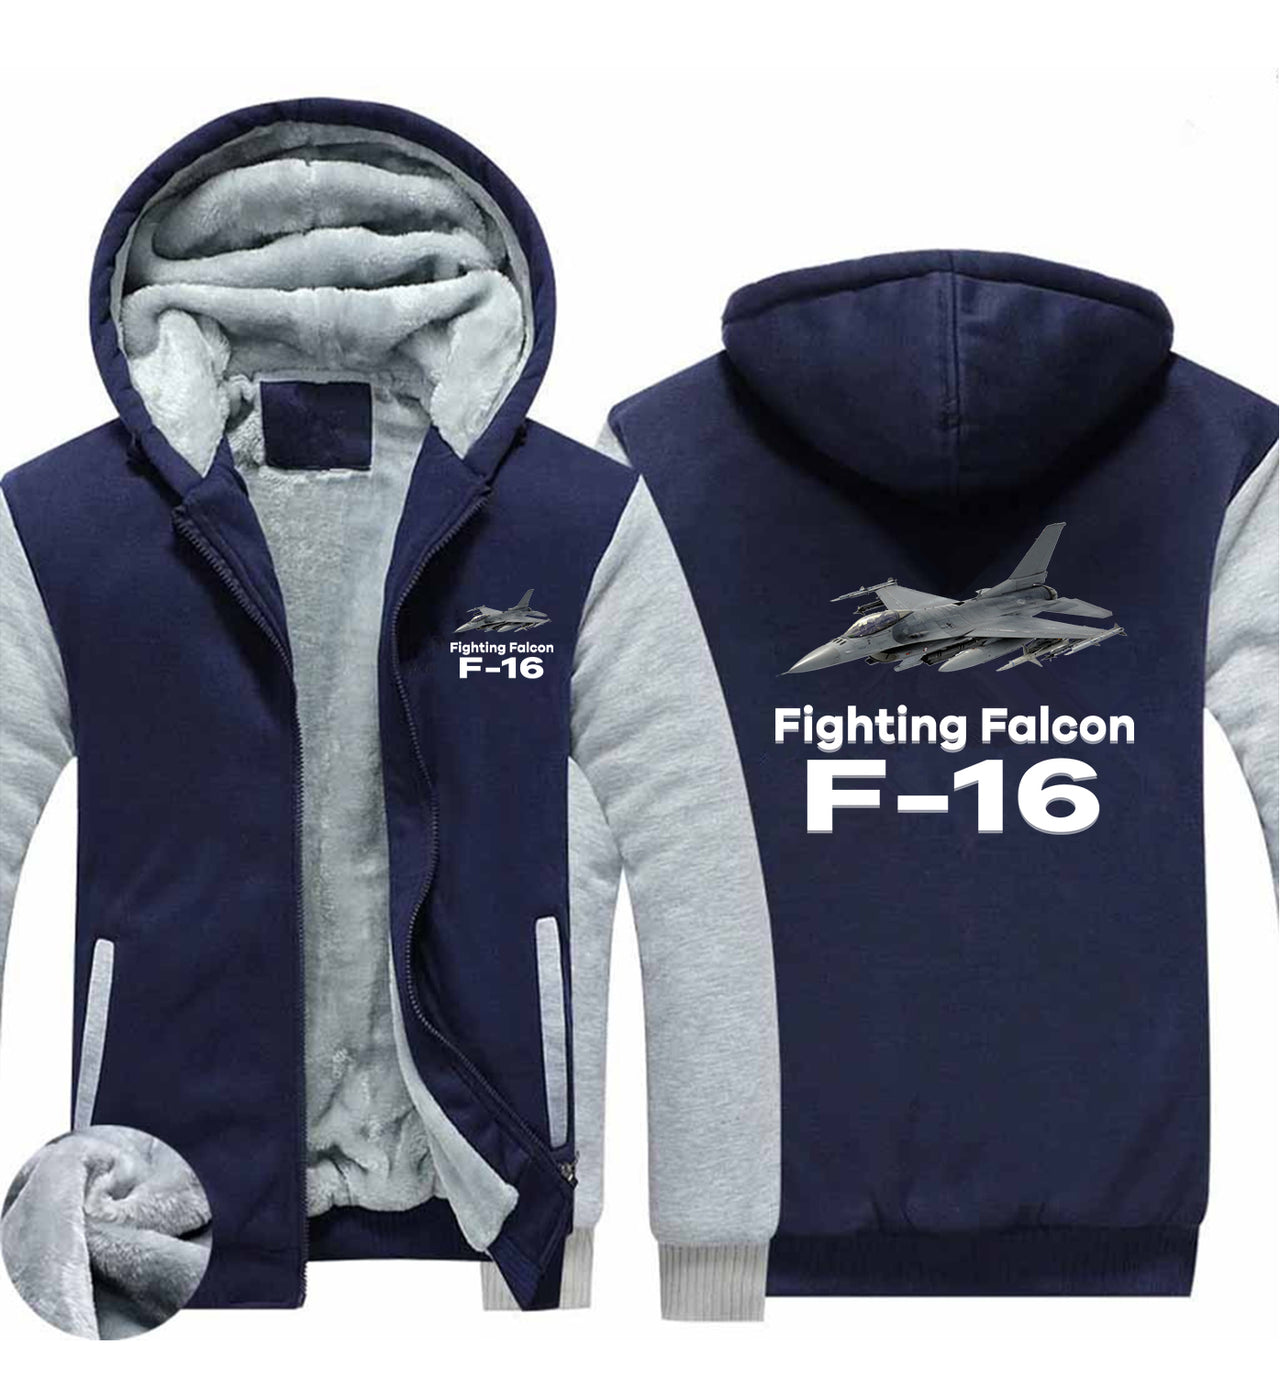 The Fighting Falcon F16 Designed Zipped Sweatshirts